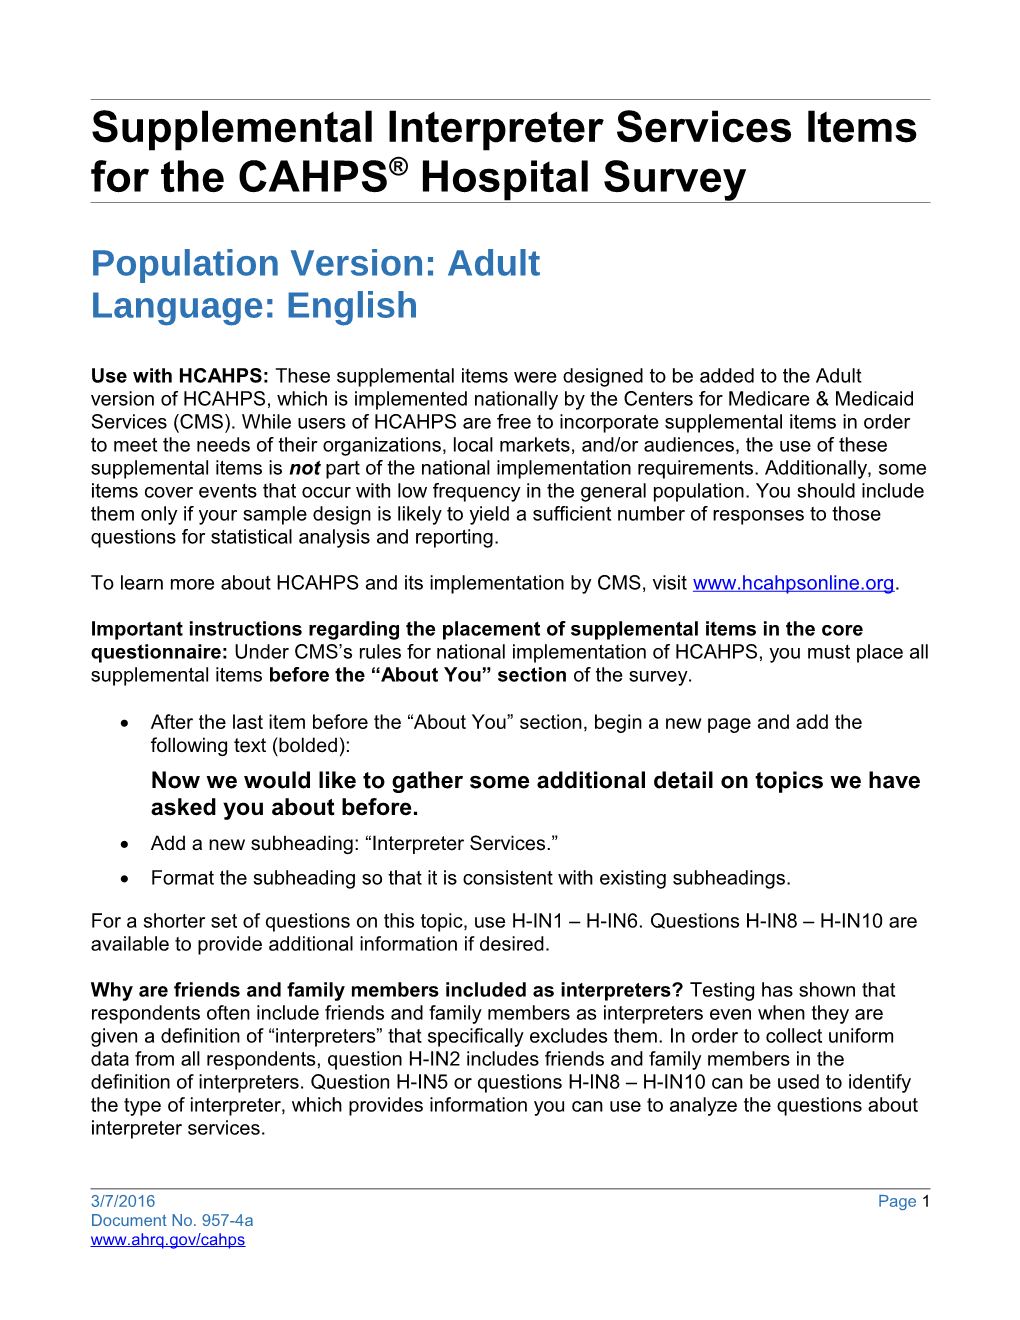 CAHPS Hospital Surveysupplemental Items: Interpreter Services